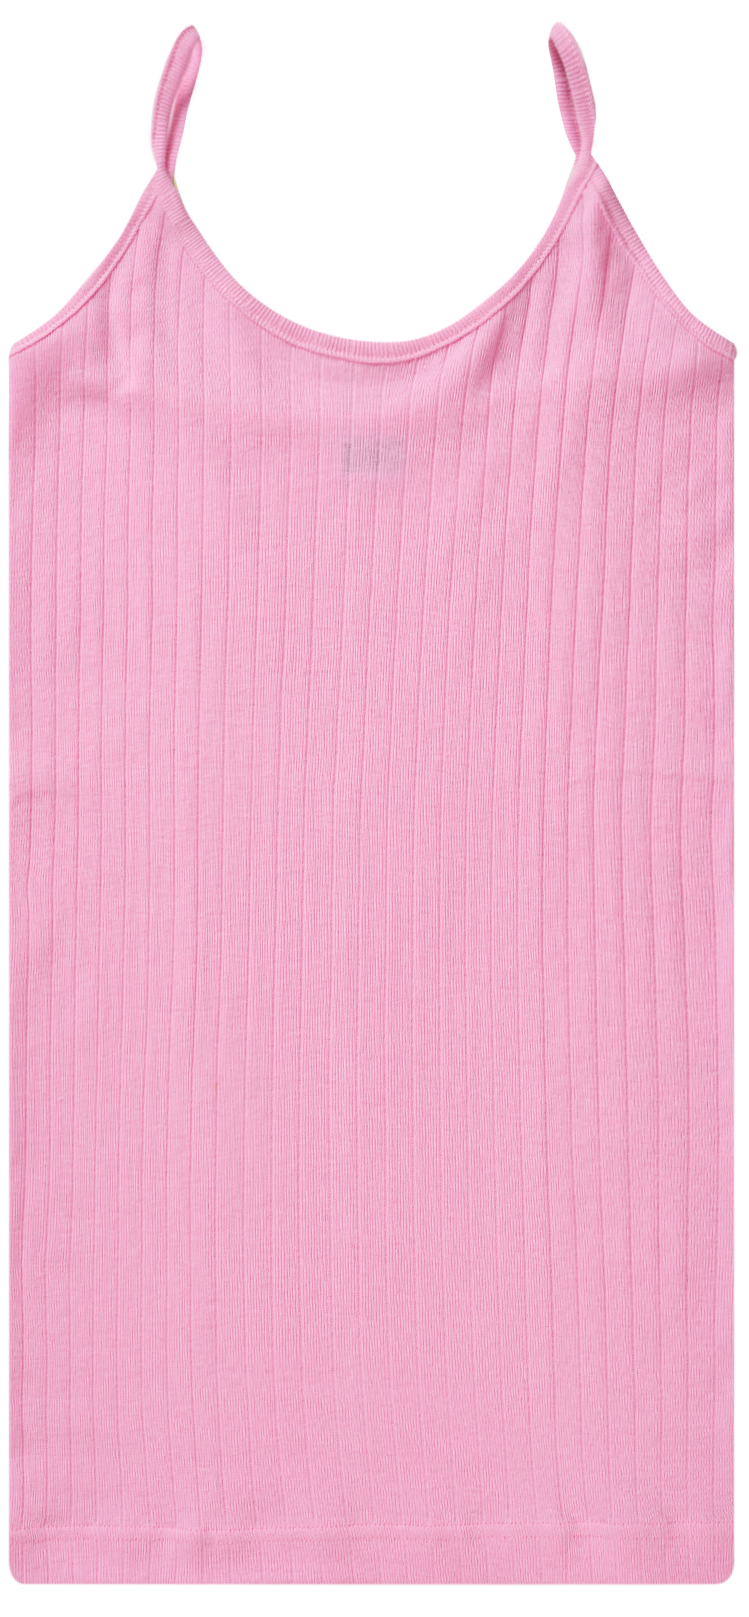 NPS Strap Top Solid Color, Light pink